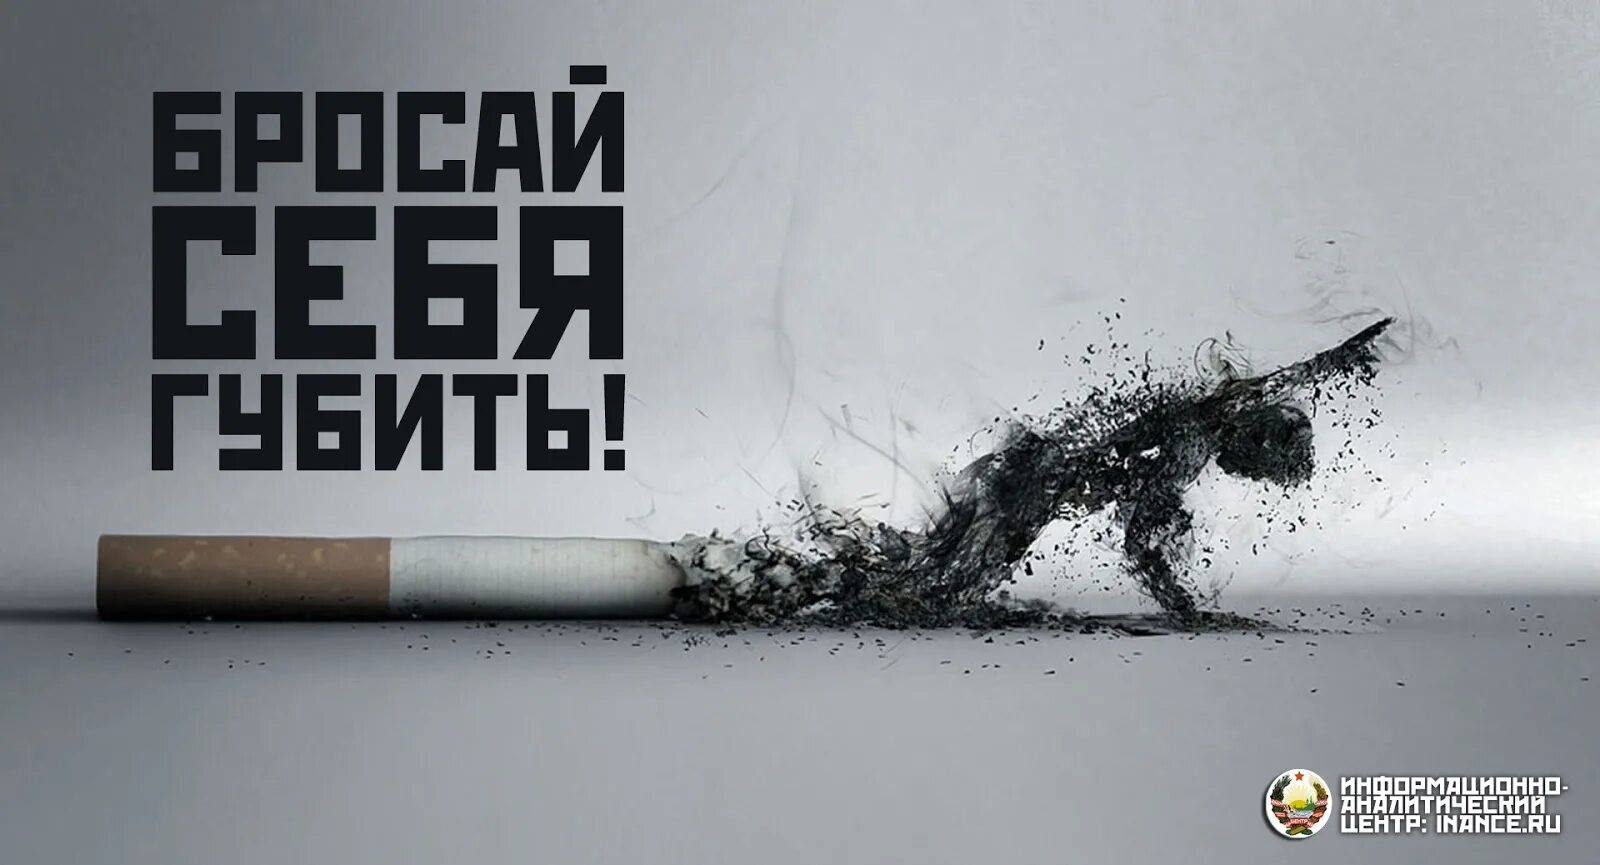 Против курения. Плакат против курения. Против сигарет. Баннер против курения. Кидай тему